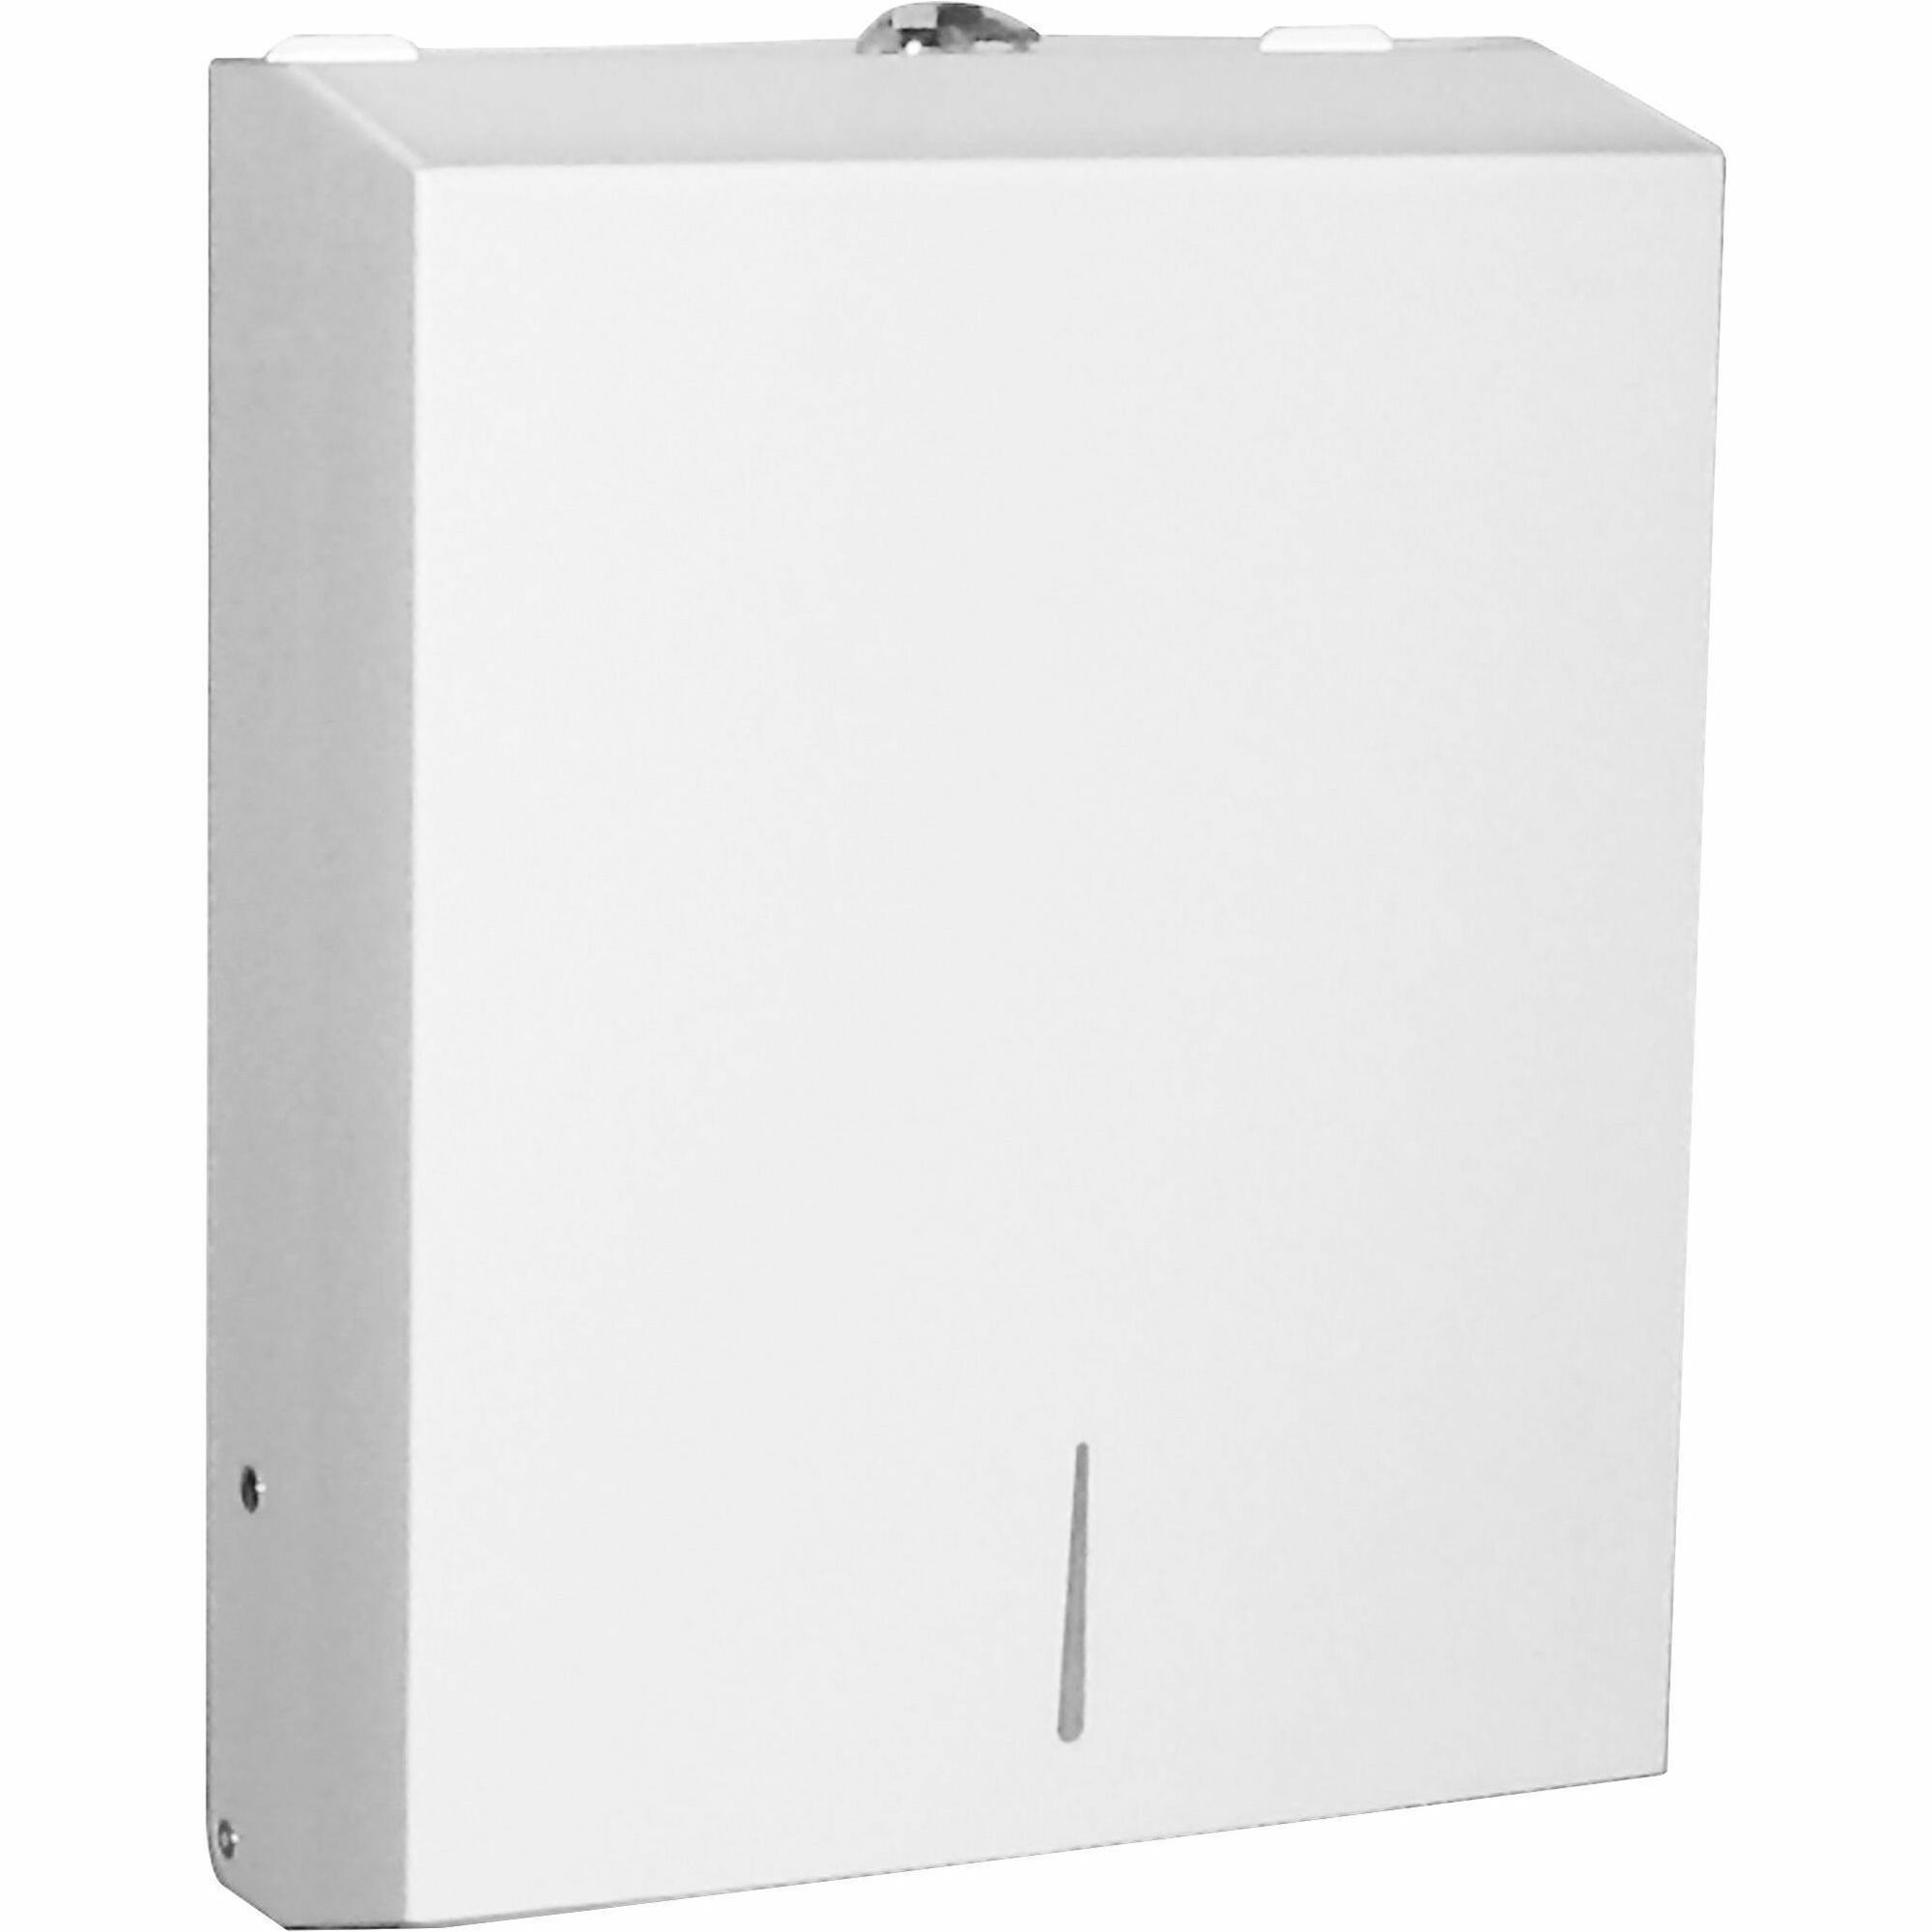 genuine-joe-c-fold-multi-fold-towel-dispenser-cabinet-c-fold-multifold-dispenser-135-height-x-11-width-x-43-depth-stainless-steel-metal-white-wall-mountable-1-each_gjo02197 - 1